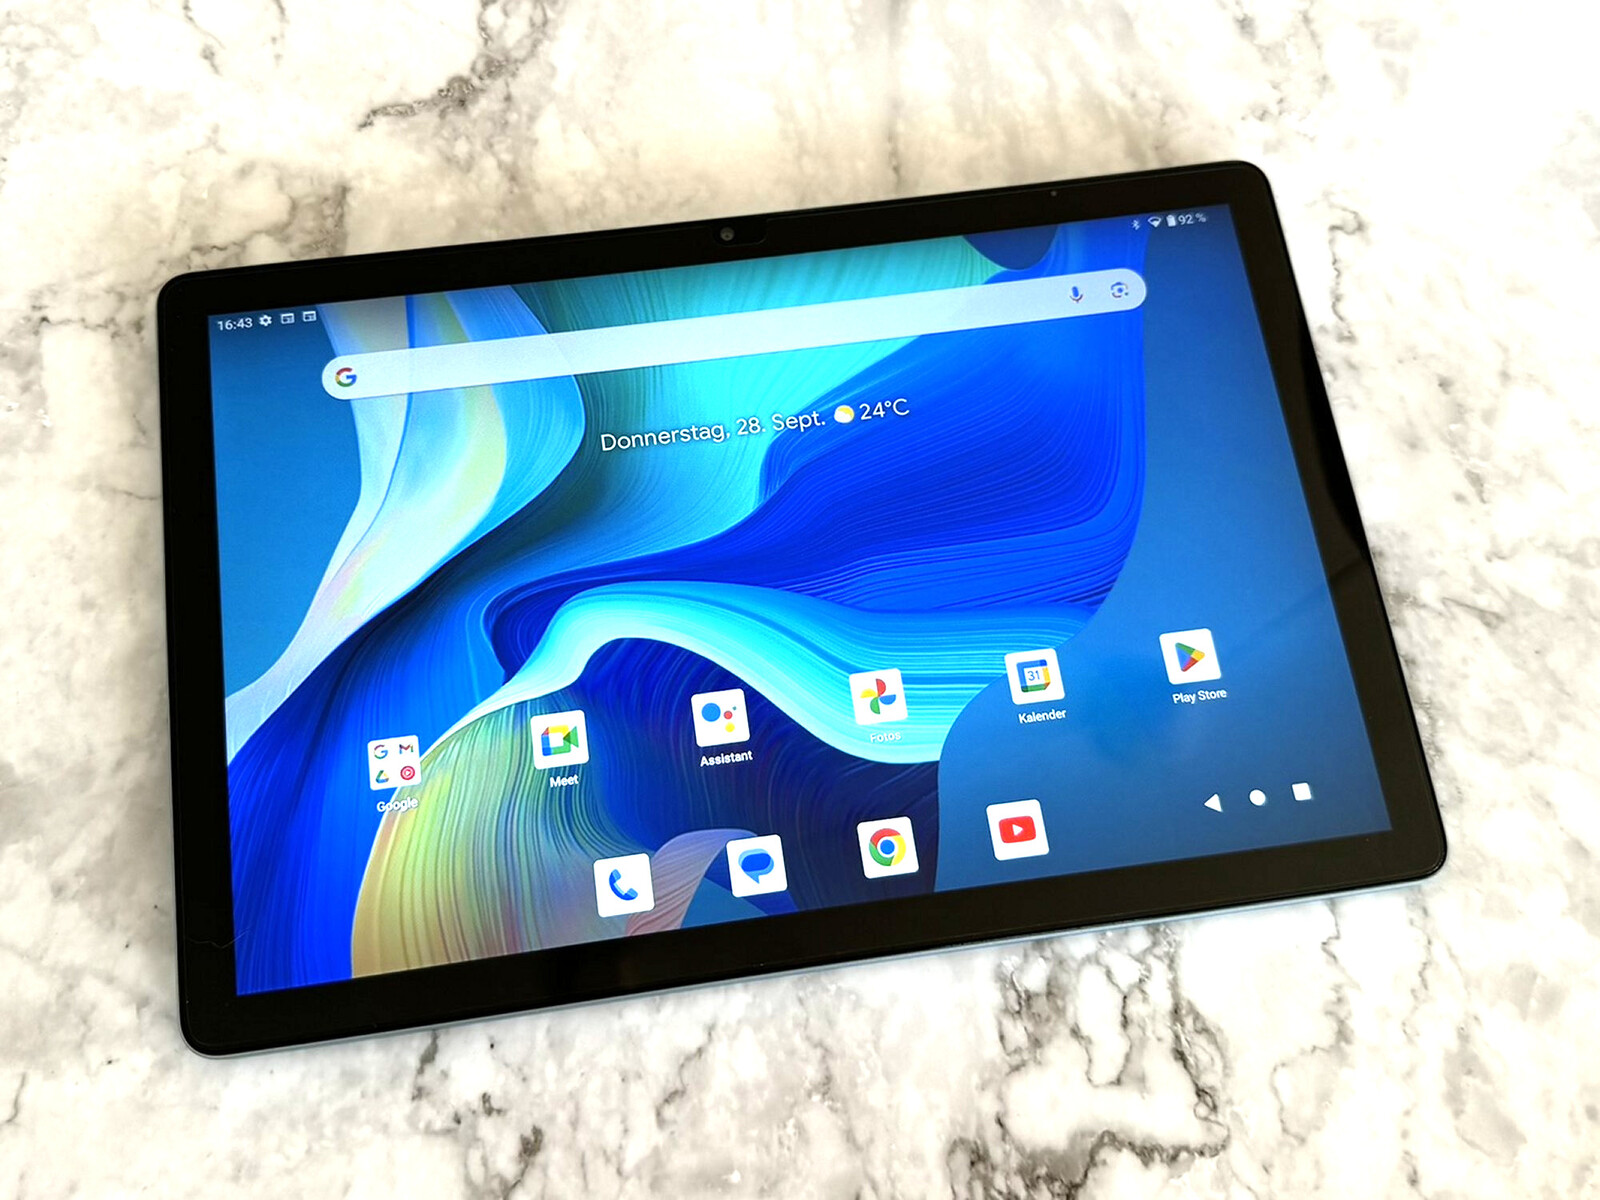 MediaPad : Huawei sort la première tablette Android 3.2